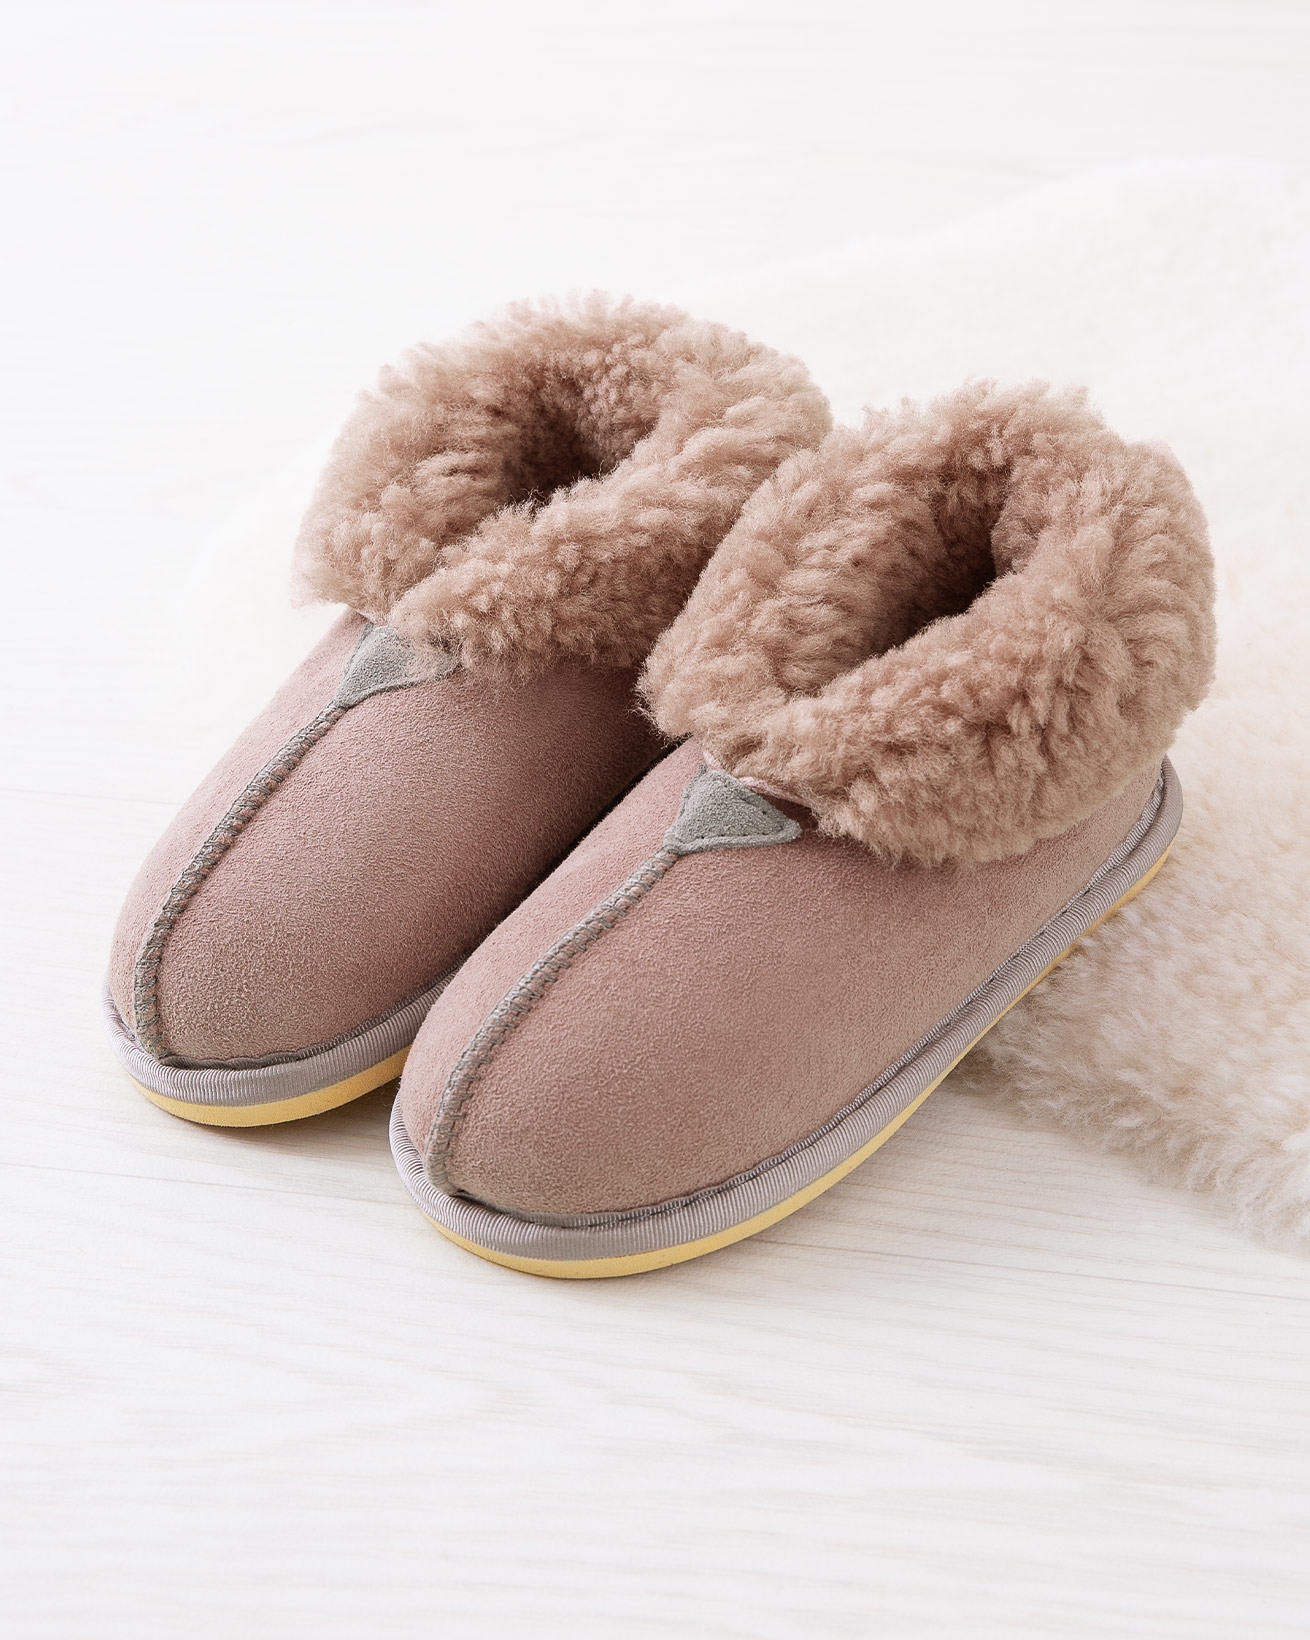 sheepskin slippers clearance